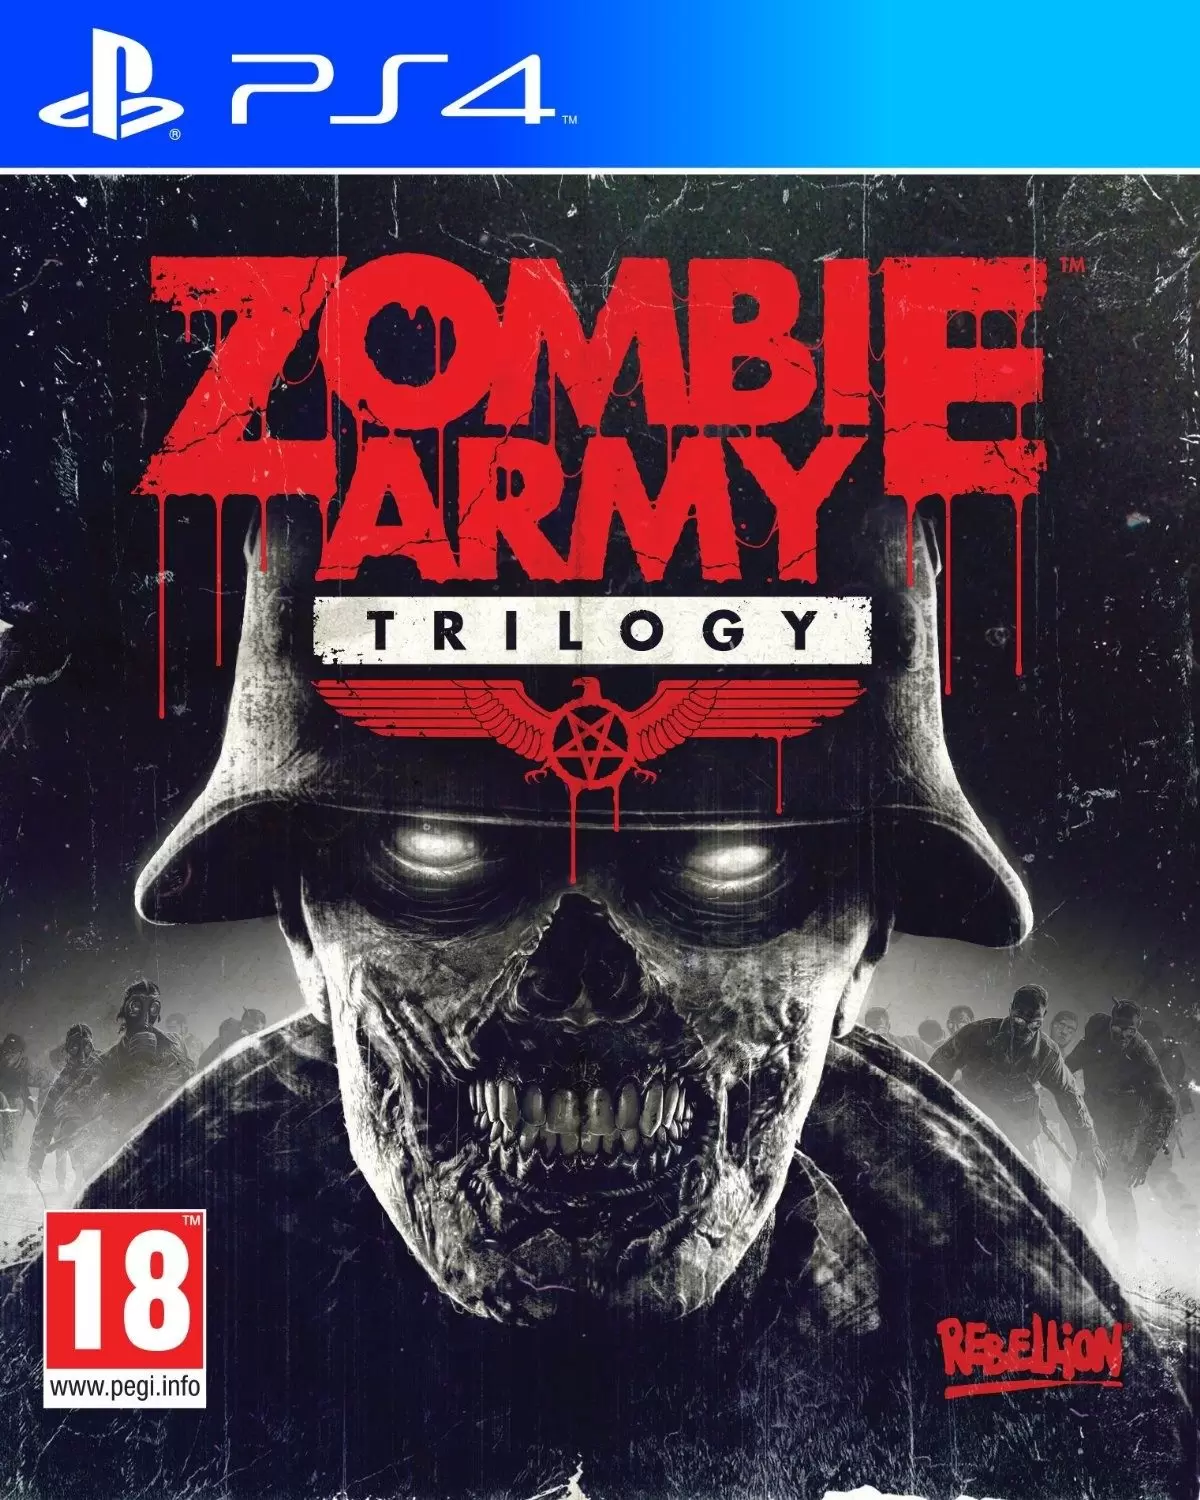 Jeux PS4 - Zombie Army Trilogy